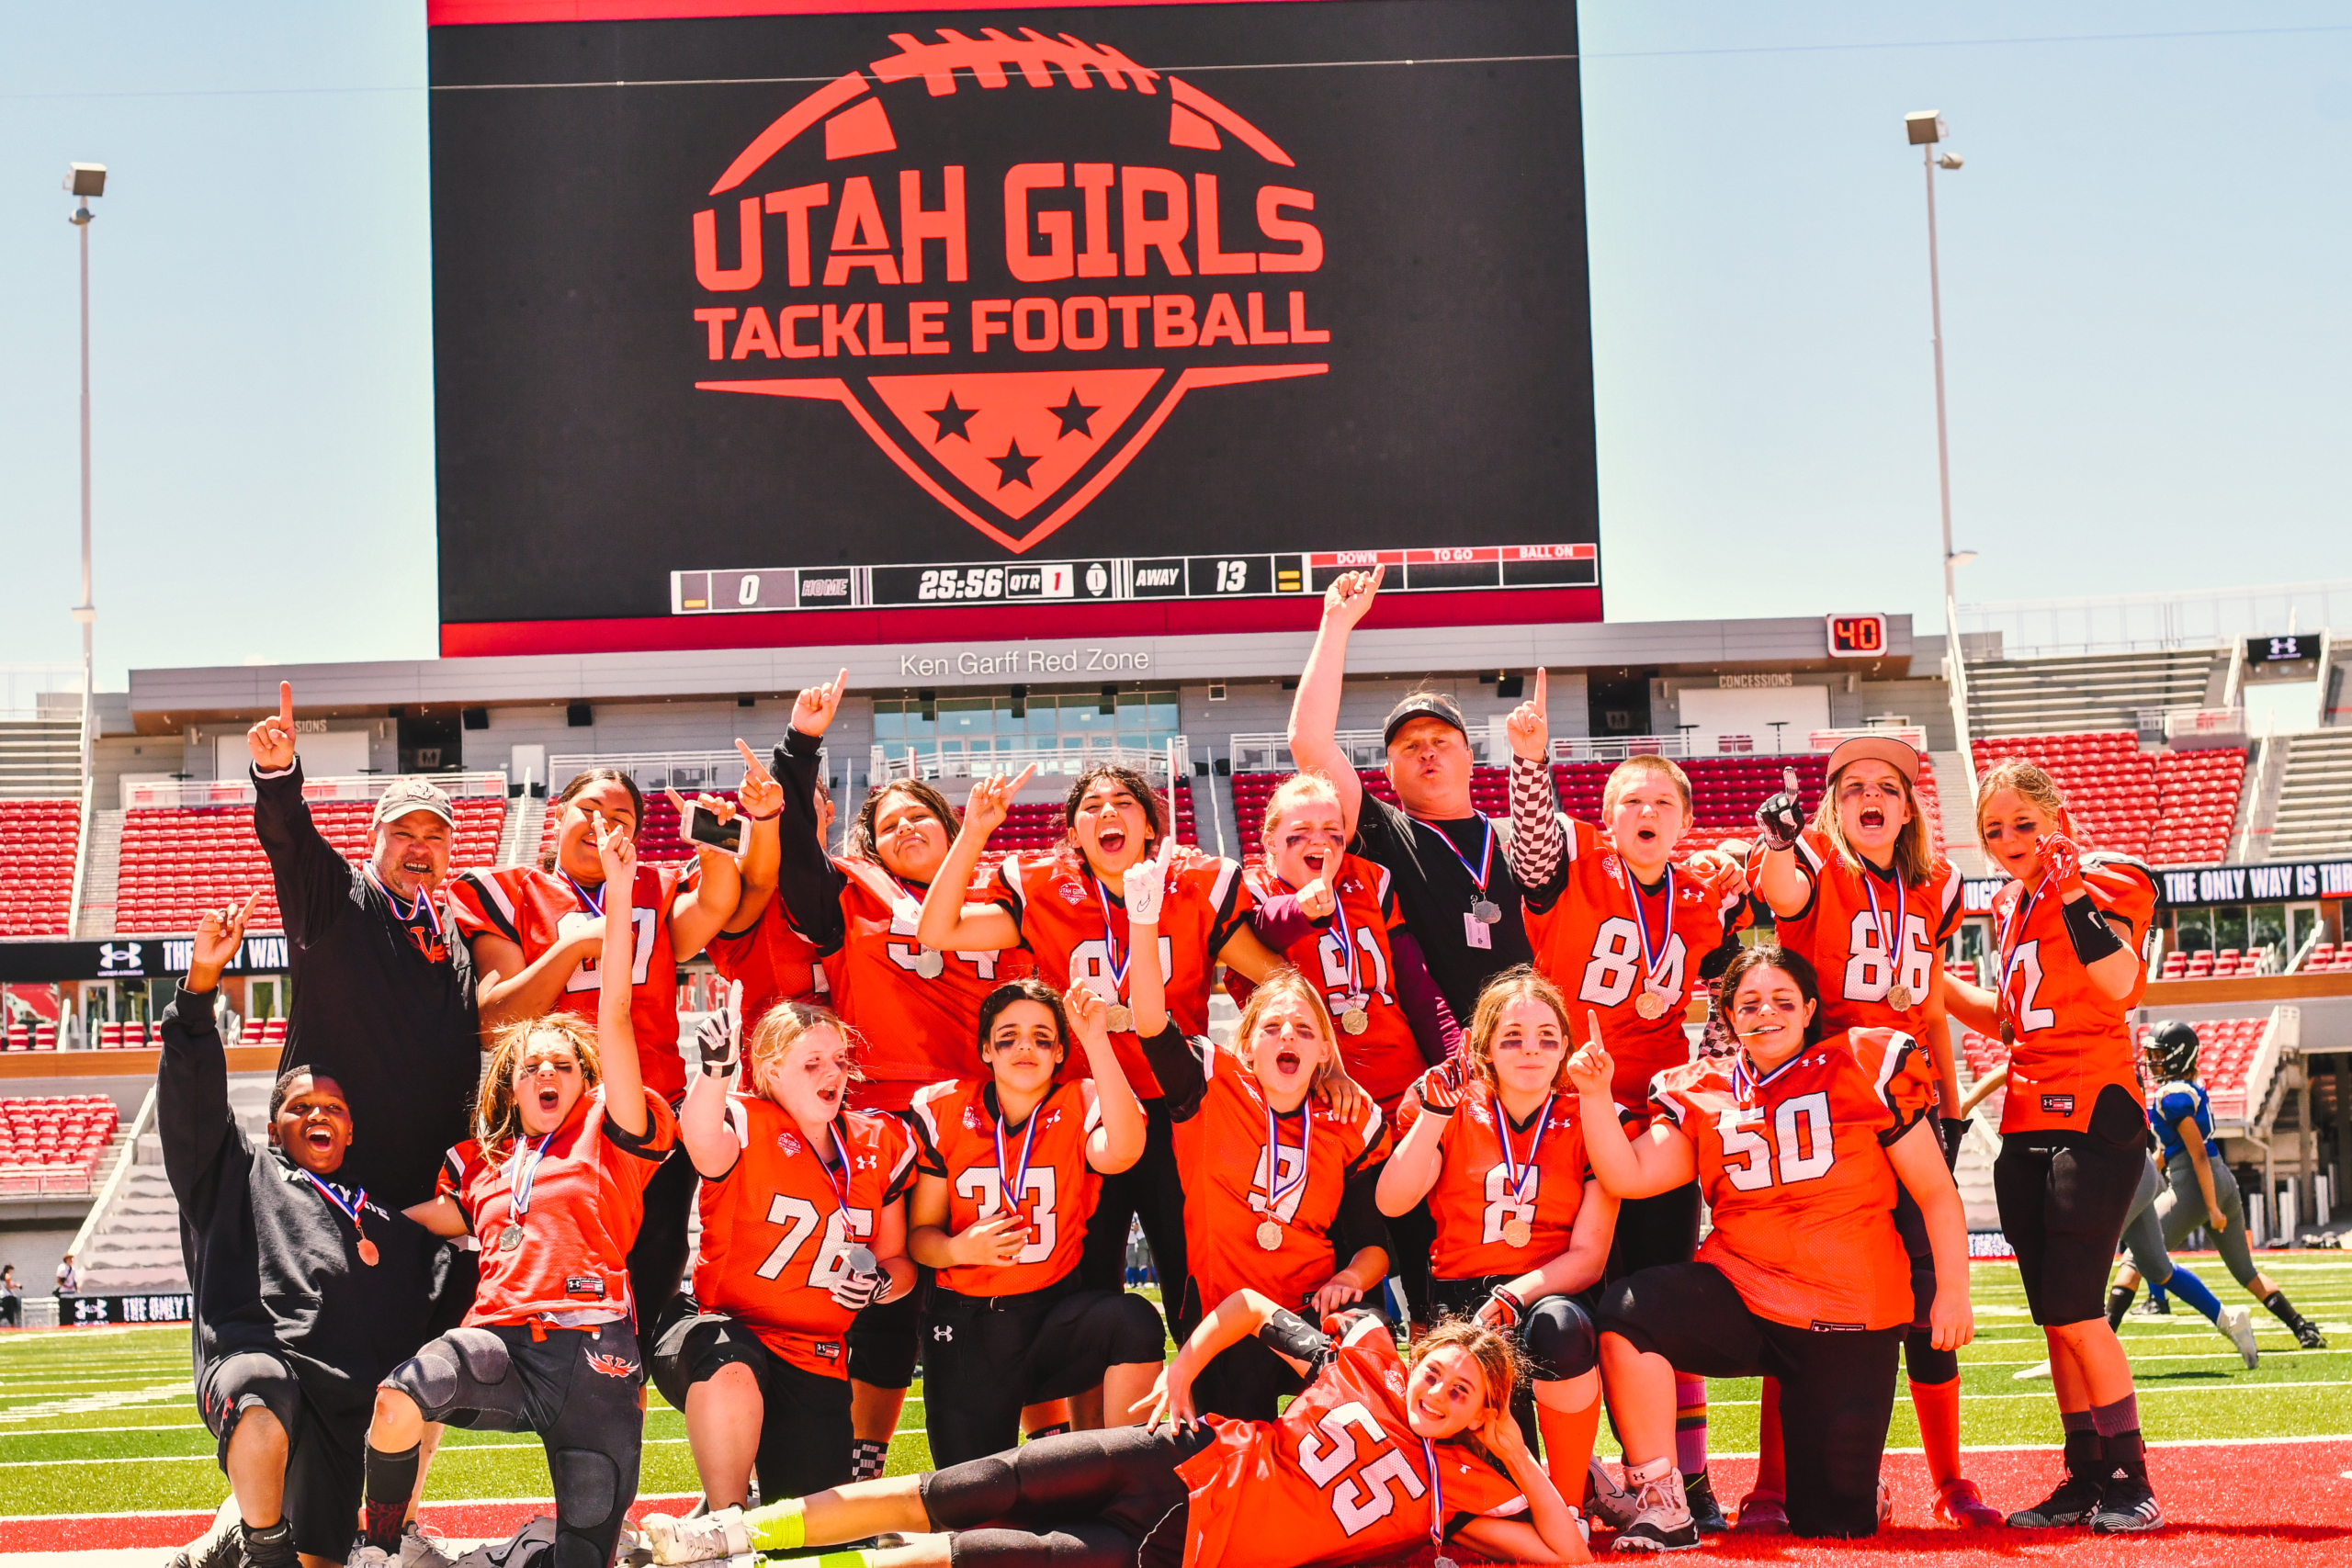 Utah Girls Tackle Football – Football is what we do.